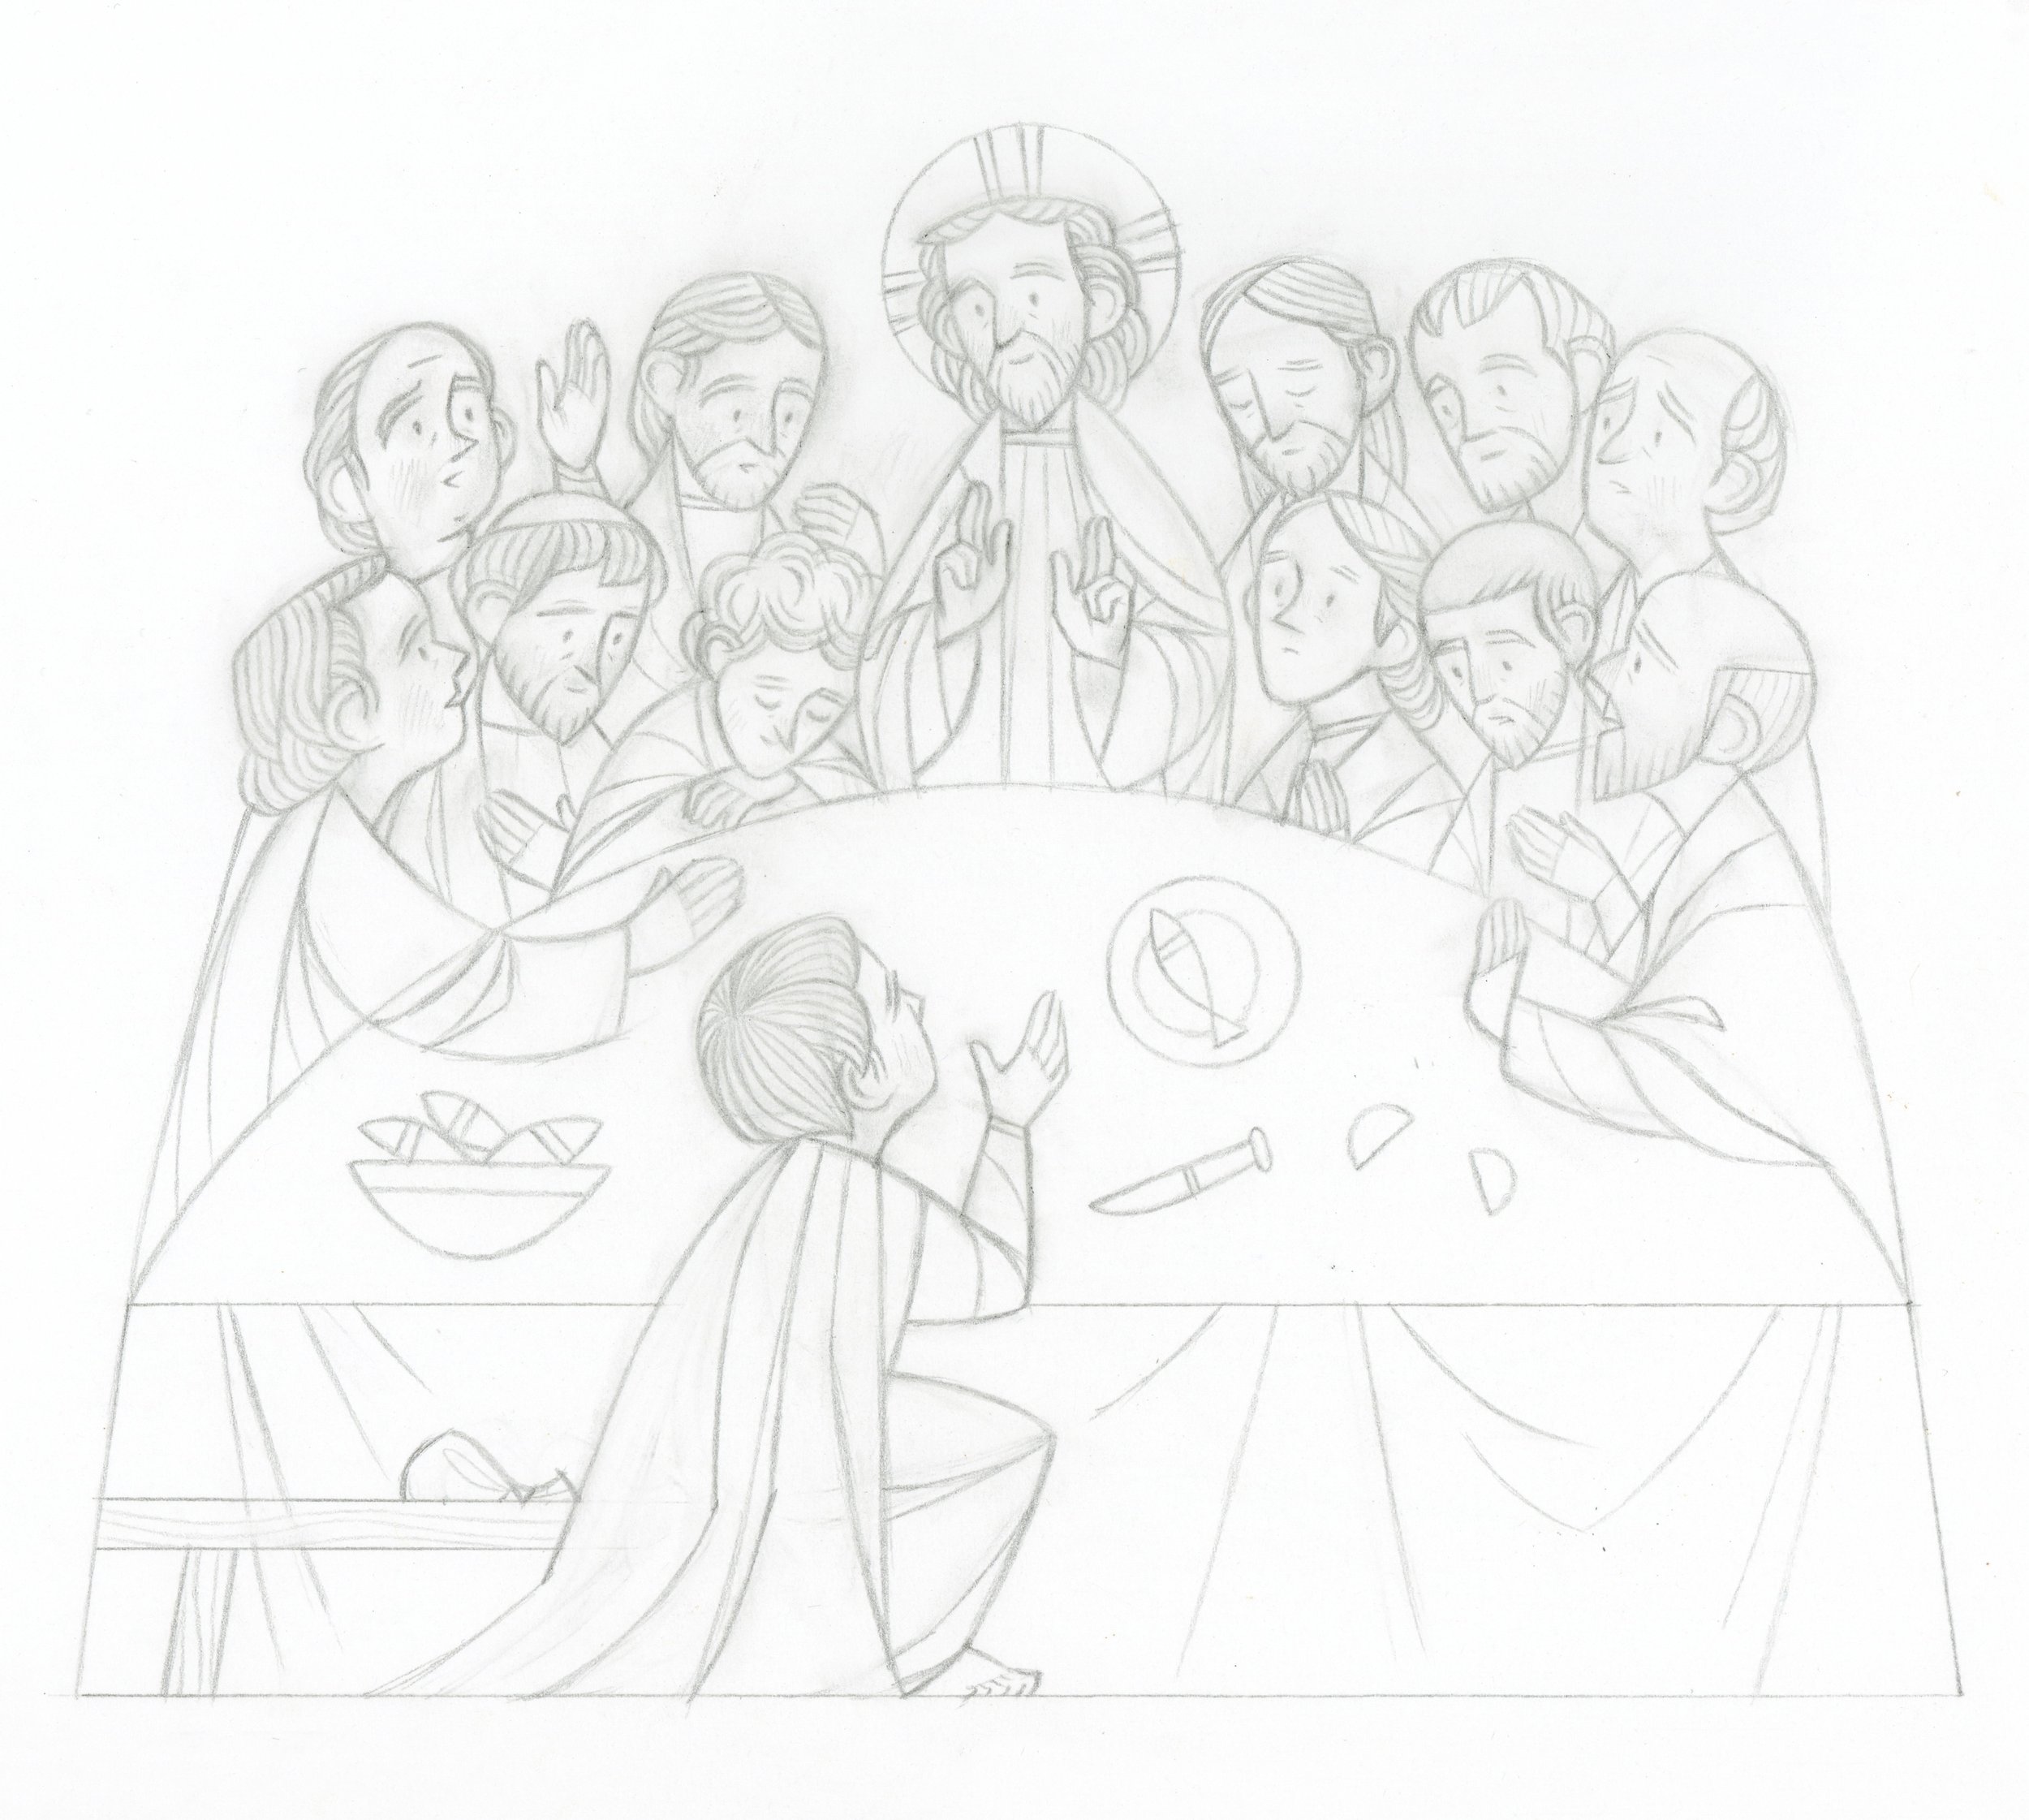 01_AY-PE_Bath Abbey_Bath Old English Gospels Interactive_The Last Supper Illustration_03.jpg